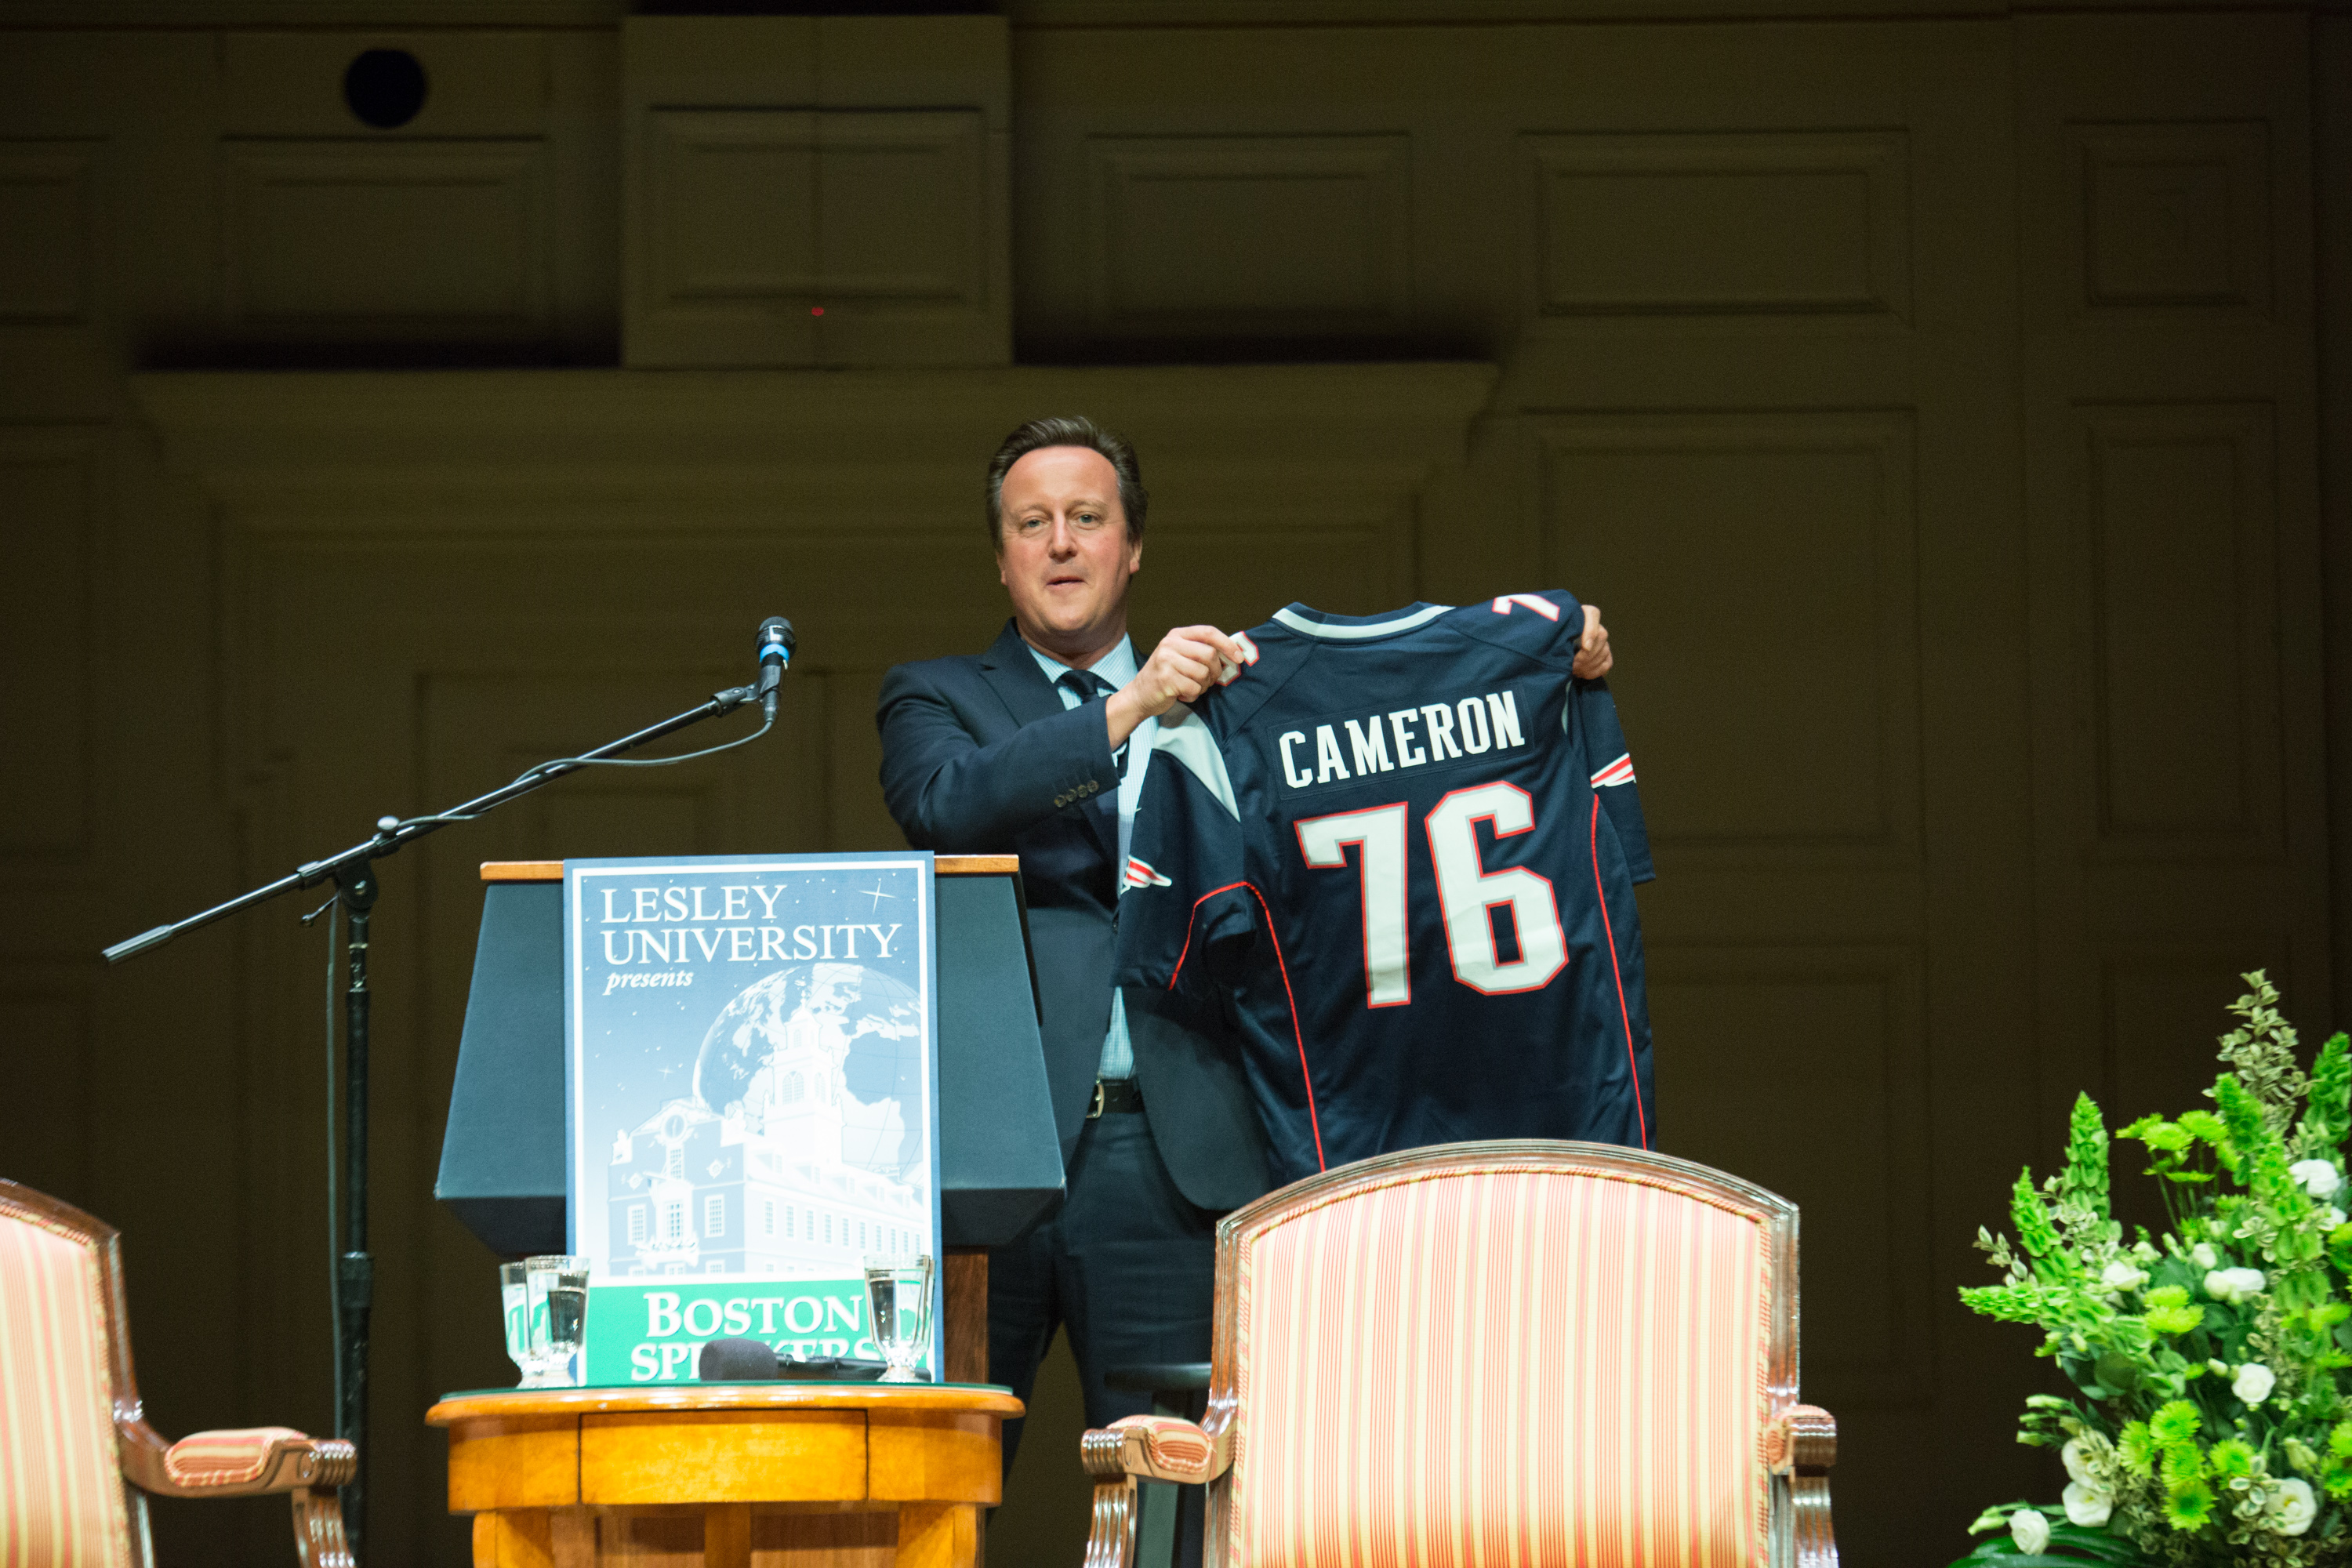 David Cameron holding up Patriots Football Jersey